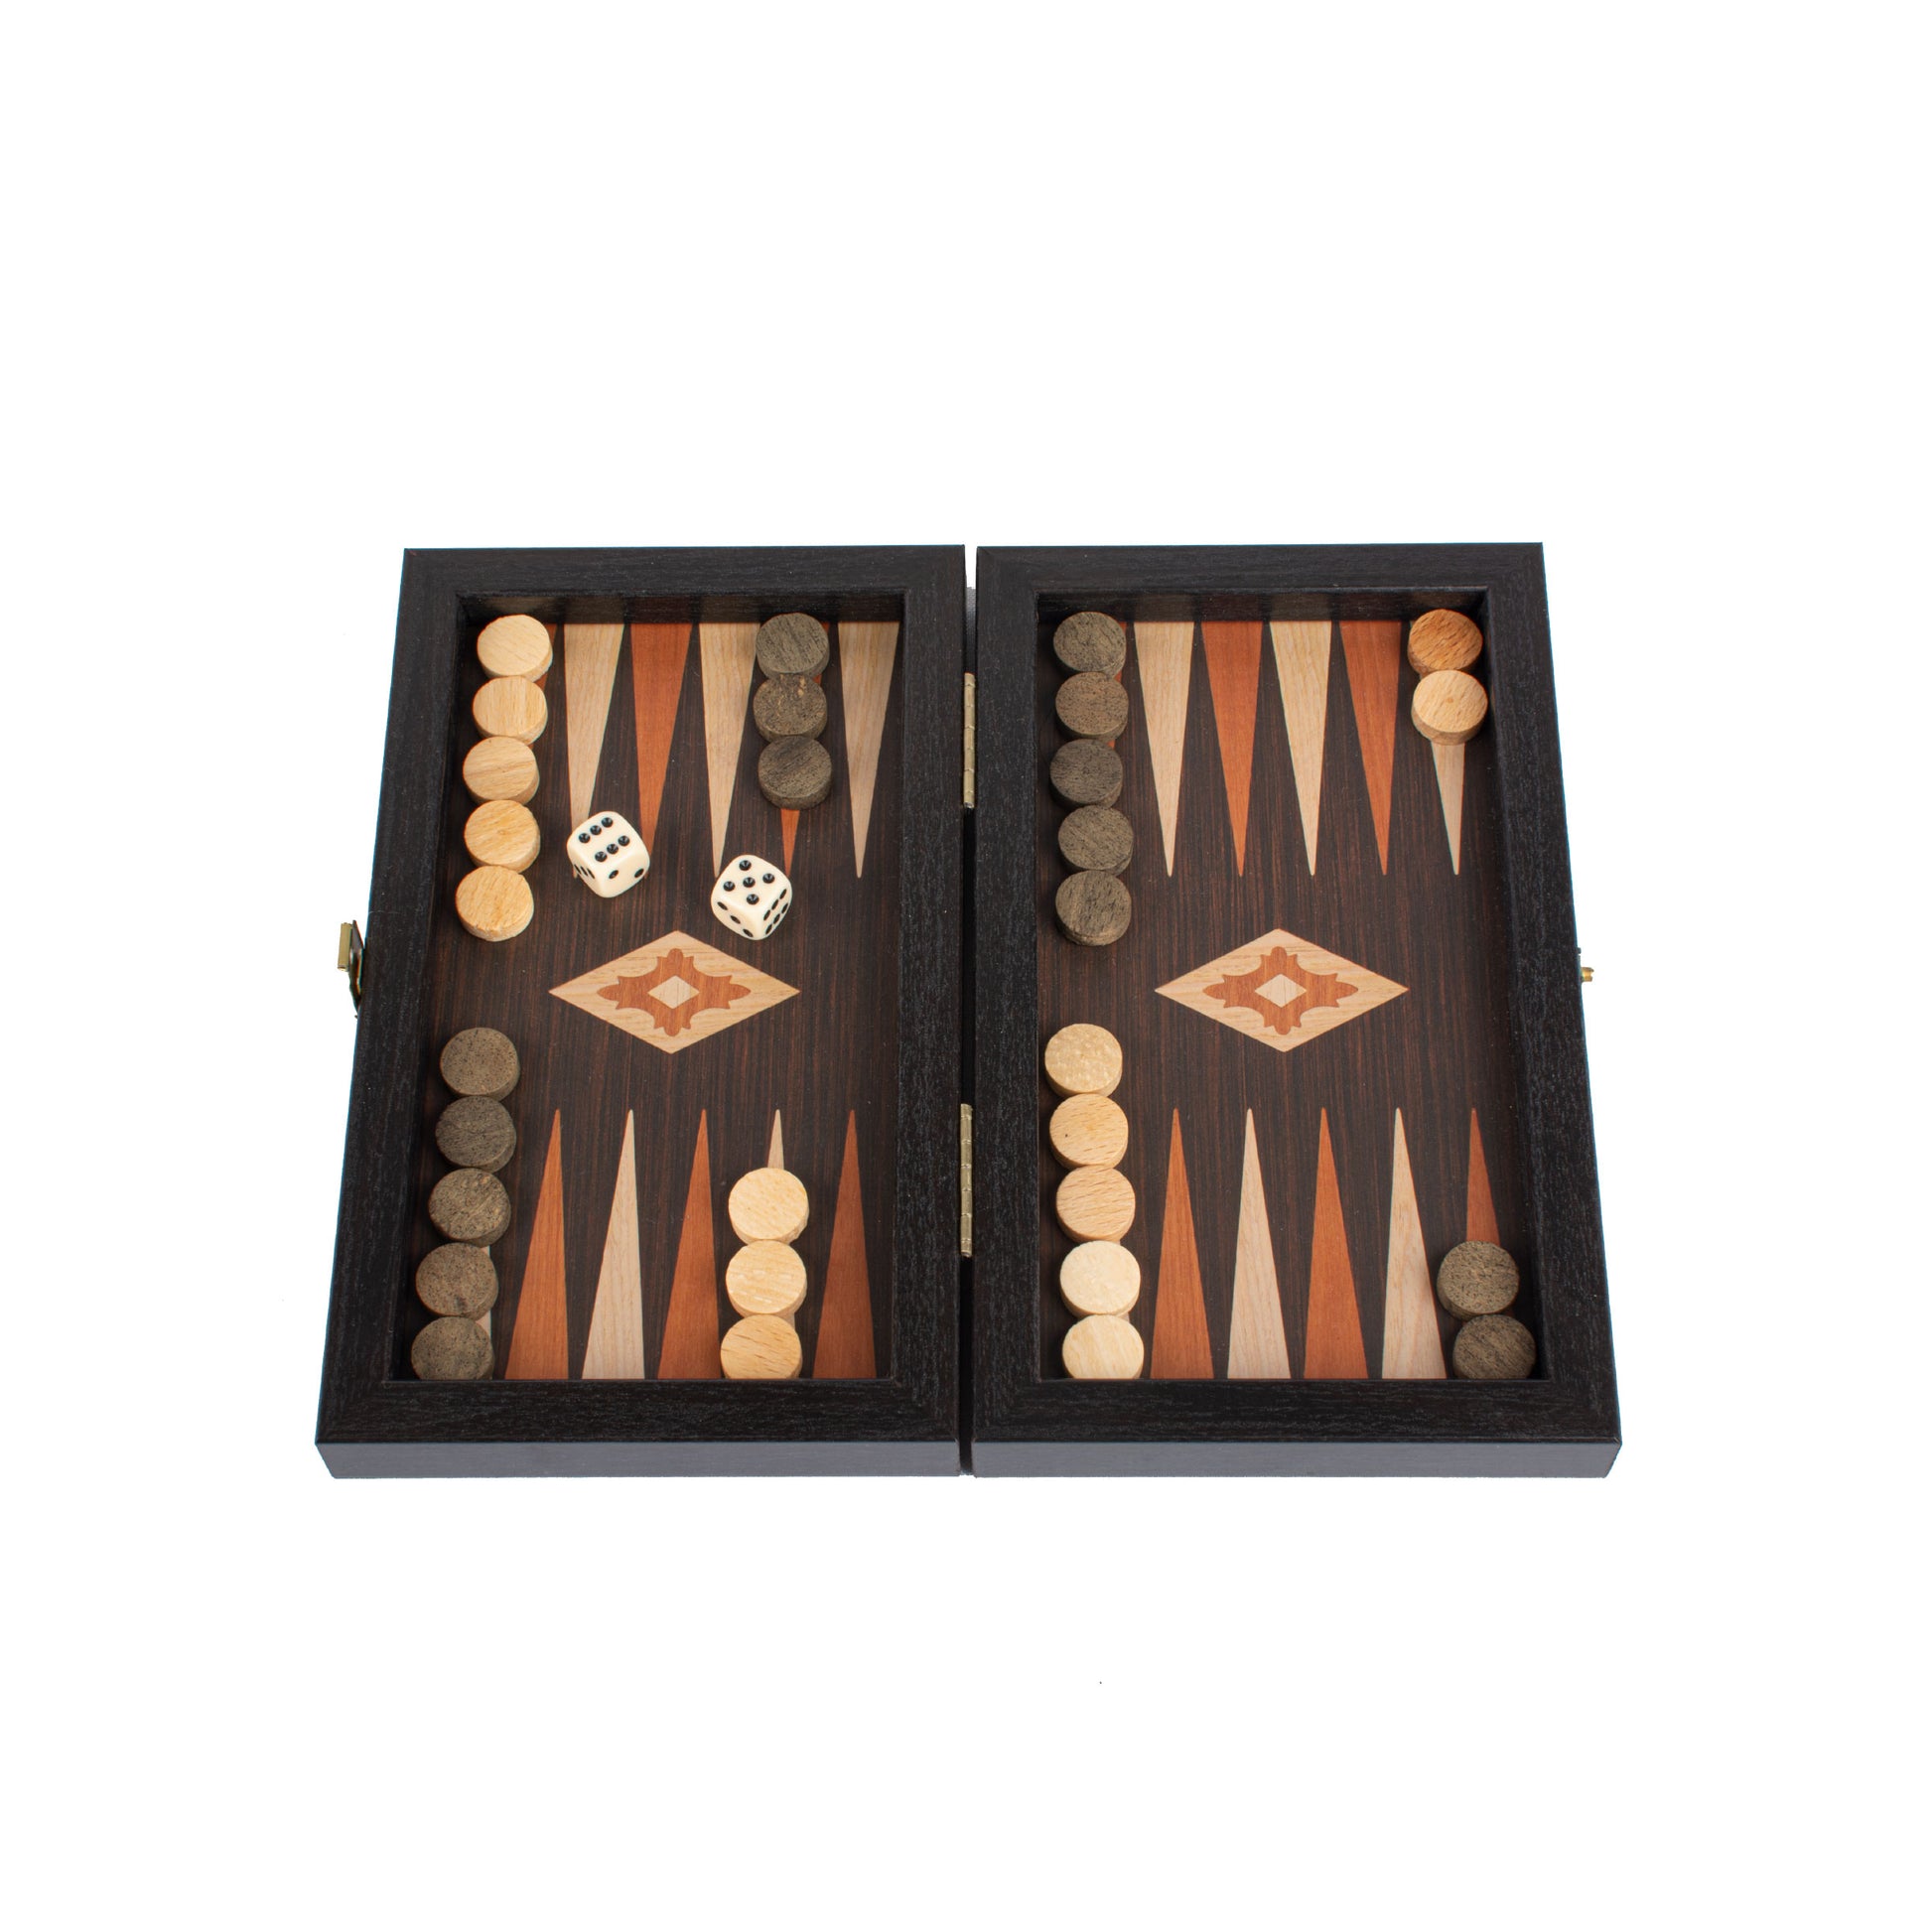 WENGE REPLICA WOOD Backgammon - Premium Backgammon from MANOPOULOS Chess & Backgammon - Just €21.80! Shop now at MANOPOULOS Chess & Backgammon